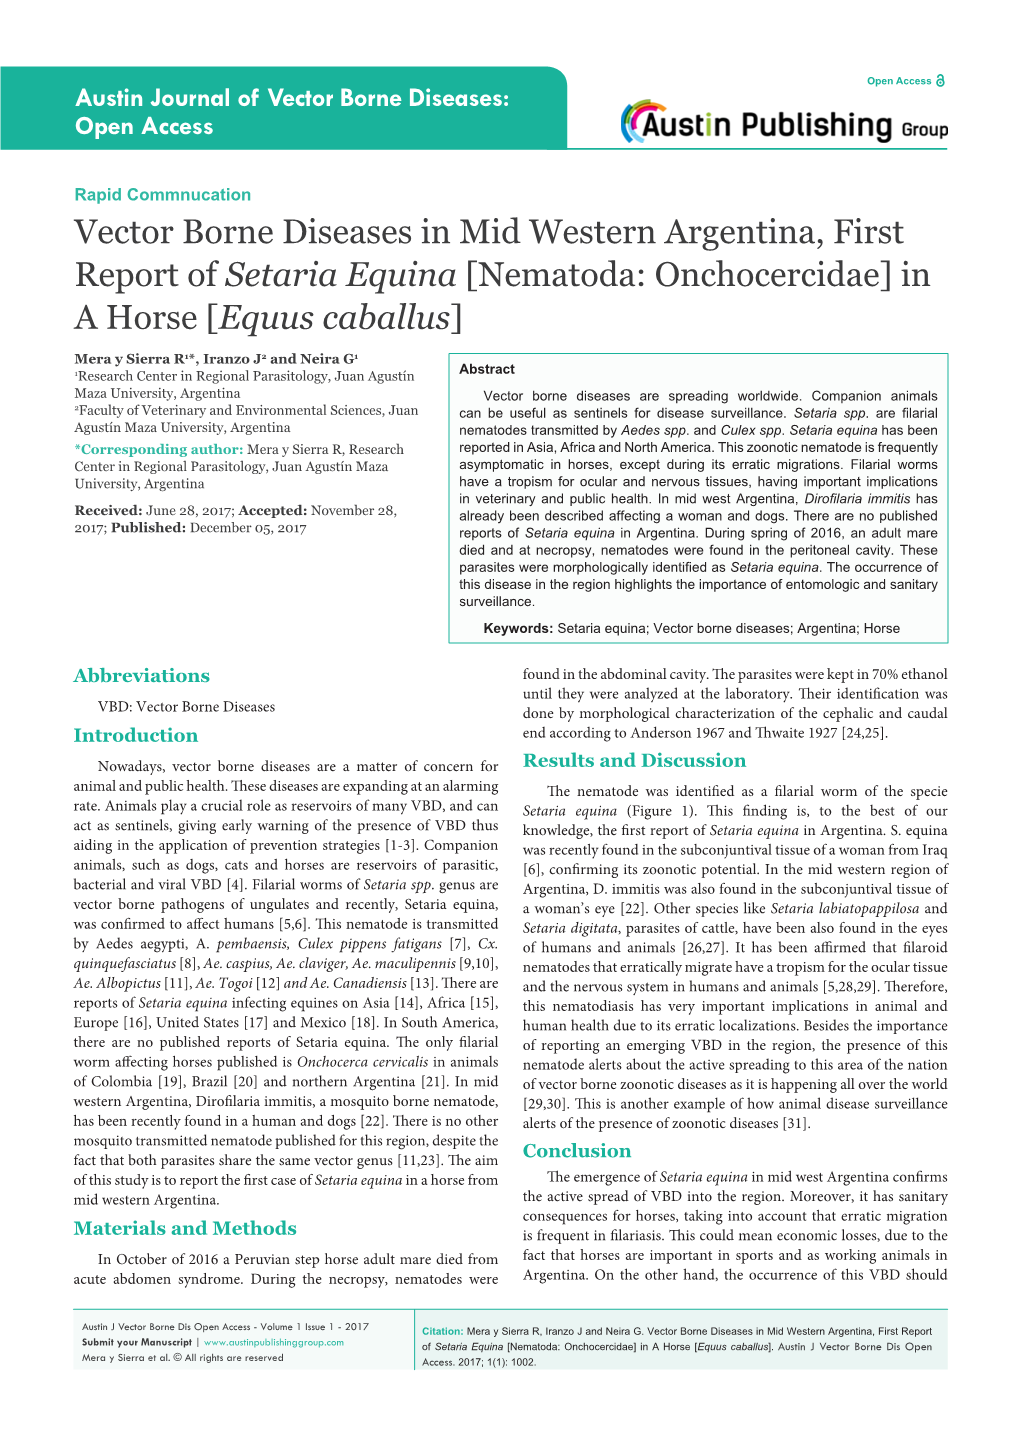 Vector Borne Diseases in Mid Western Argentina, First Report of Setaria Equina [Nematoda: Onchocercidae] in a Horse [Equus Caballus]